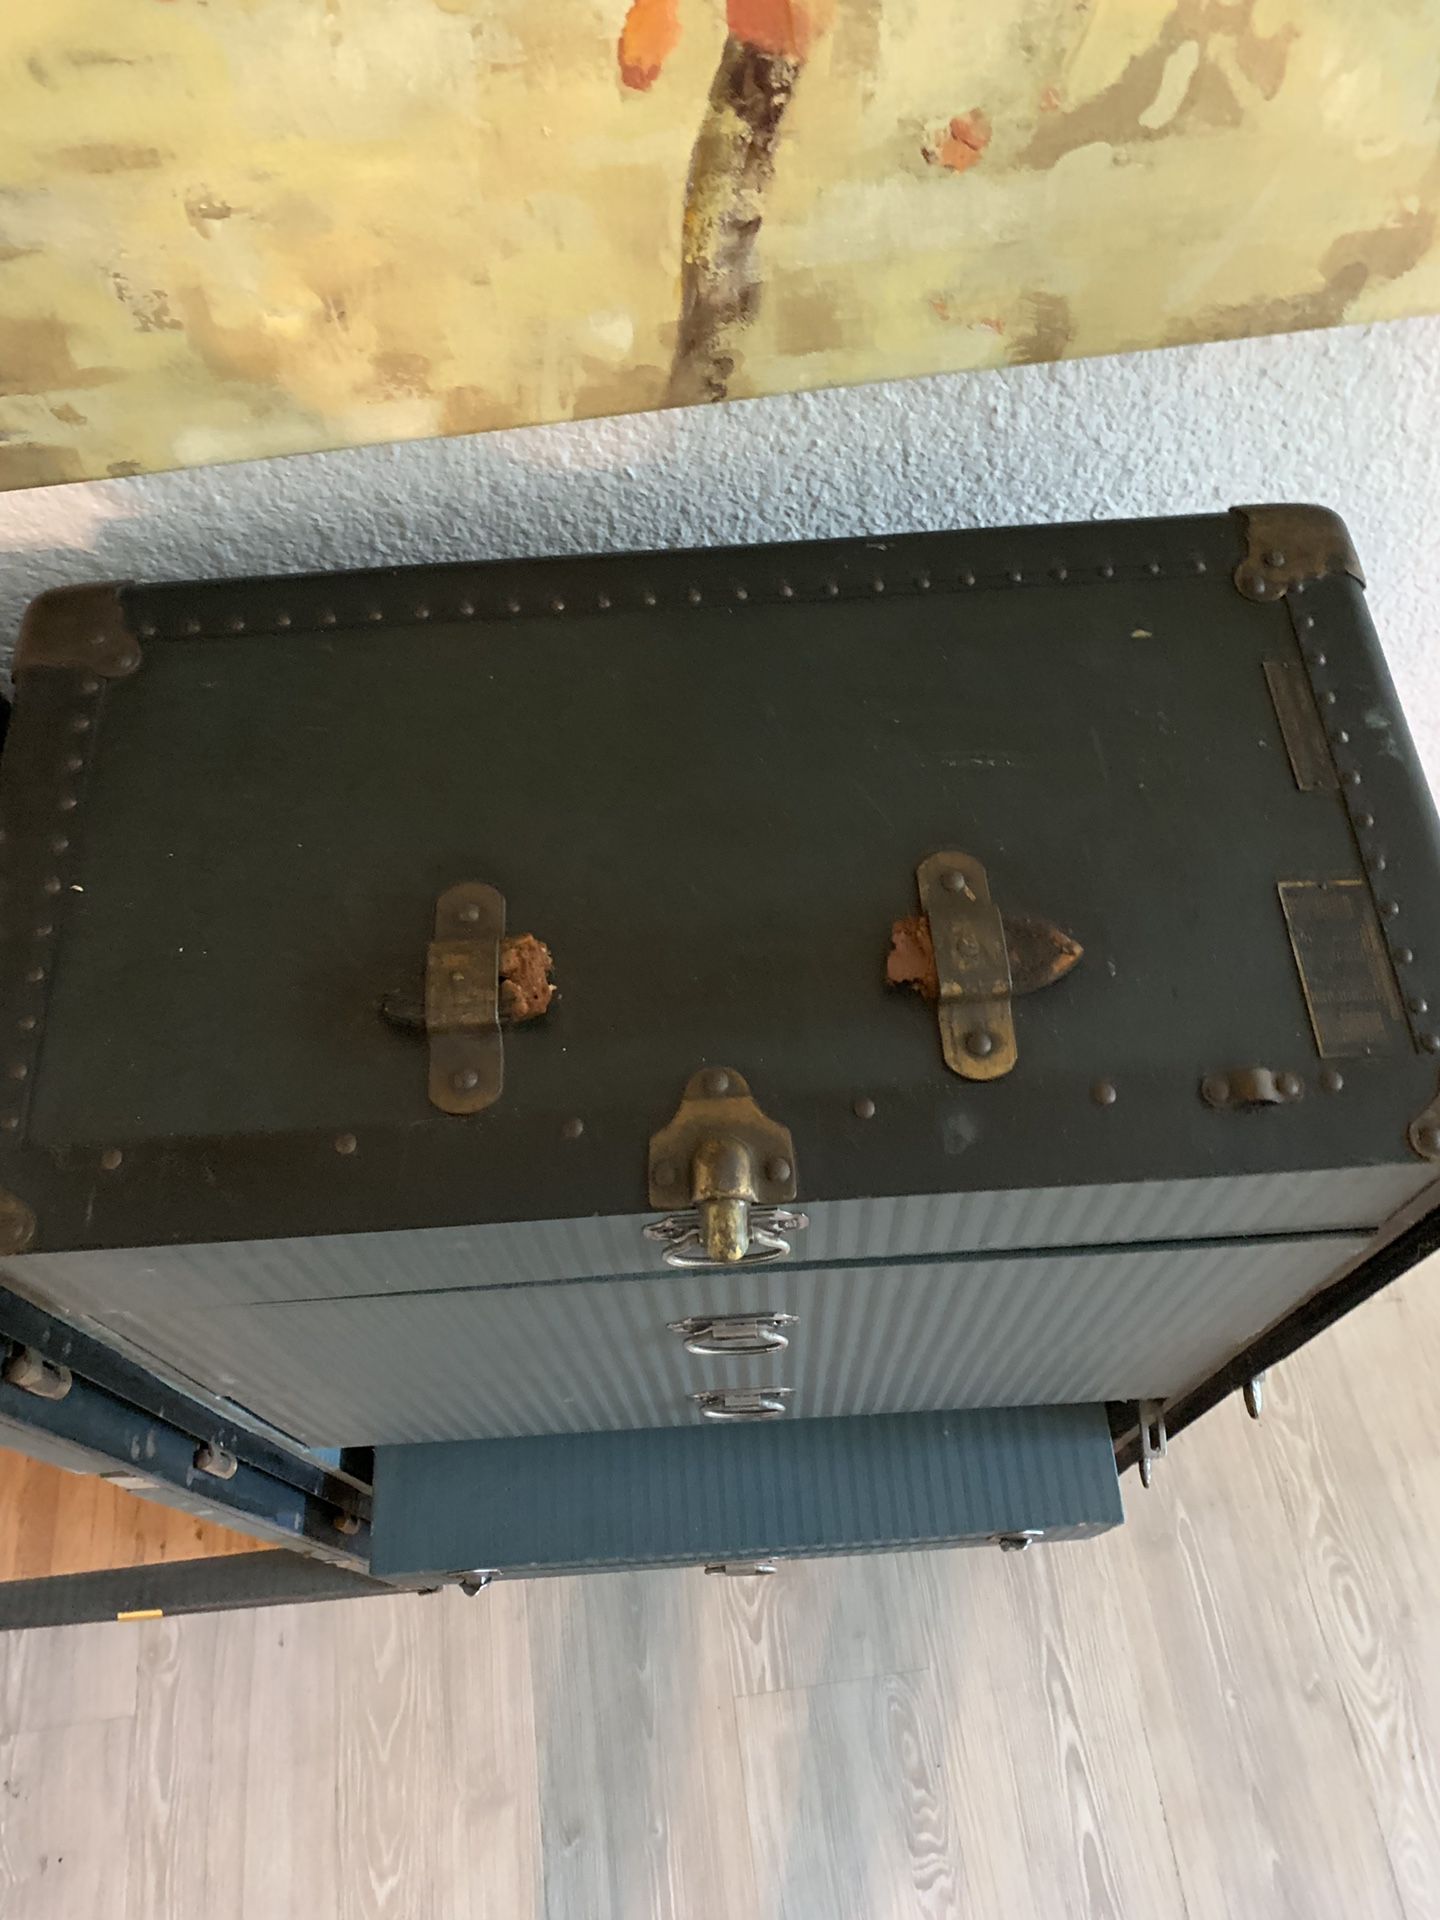 Oshkosh Trunks And Luggage Steamer Trunk Auction